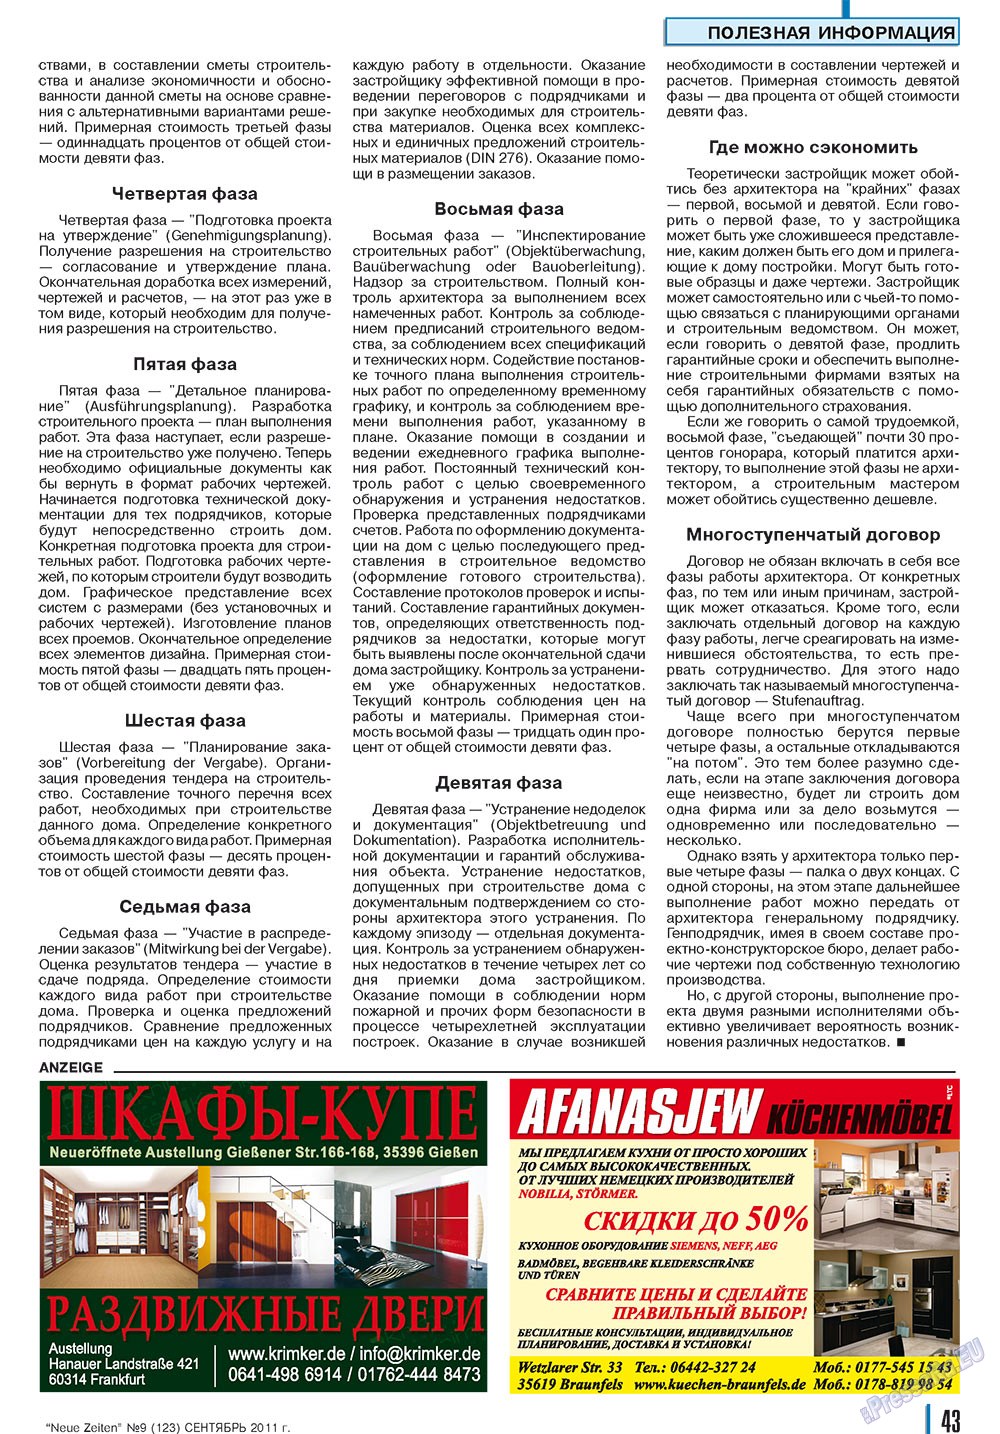 Neue Zeiten (журнал). 2011 год, номер 9, стр. 43